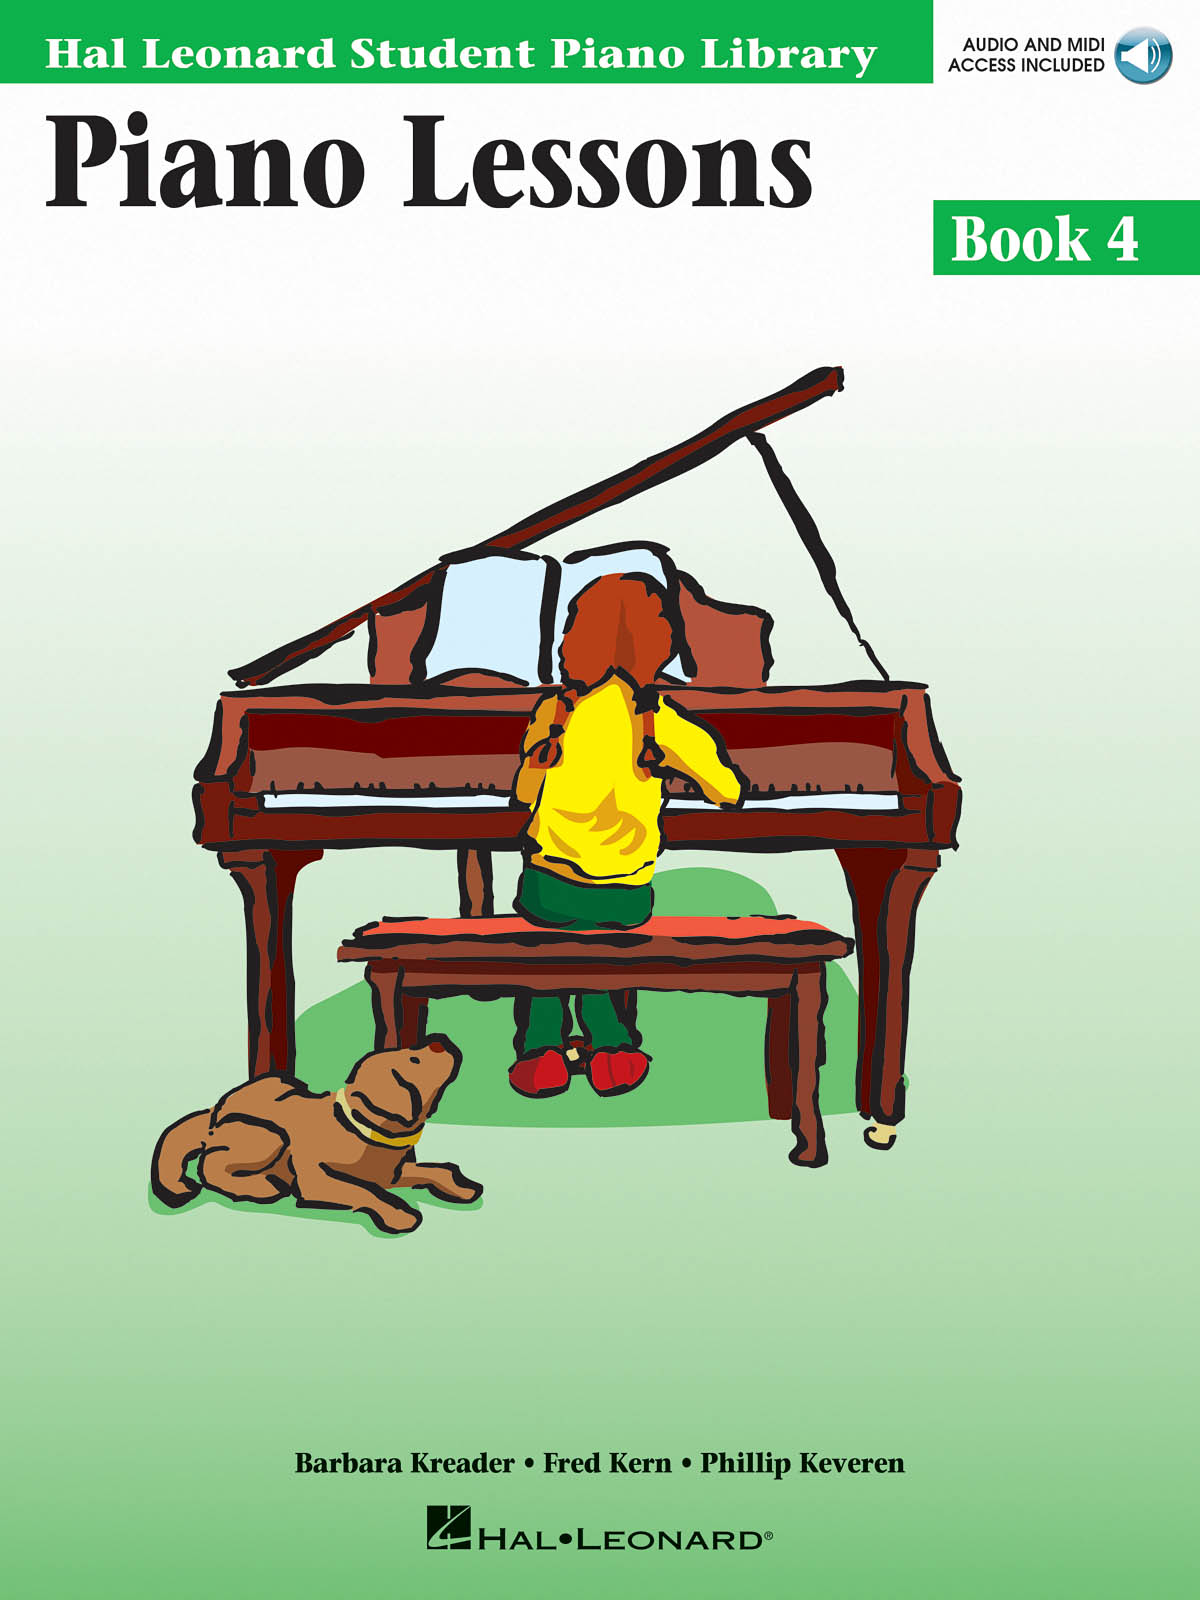 Hal Leonard Student Piano Library: Piano Lessons Book 4 (Book/CD)